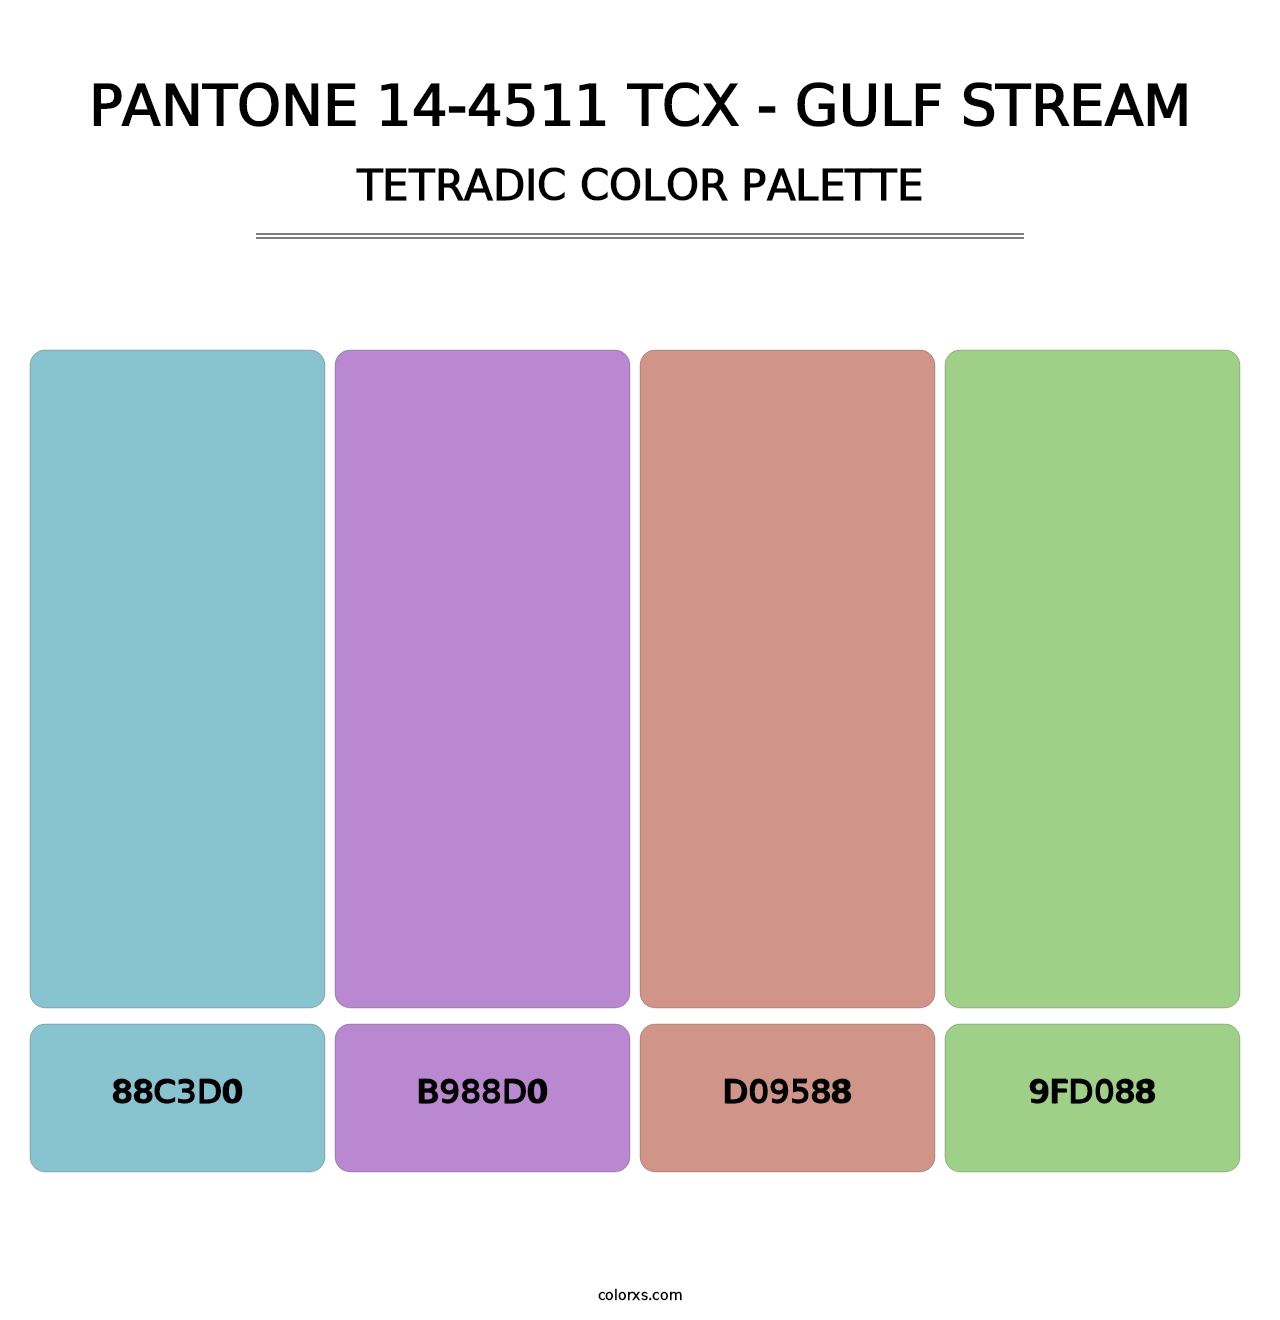 PANTONE 14-4511 TCX - Gulf Stream - Tetradic Color Palette